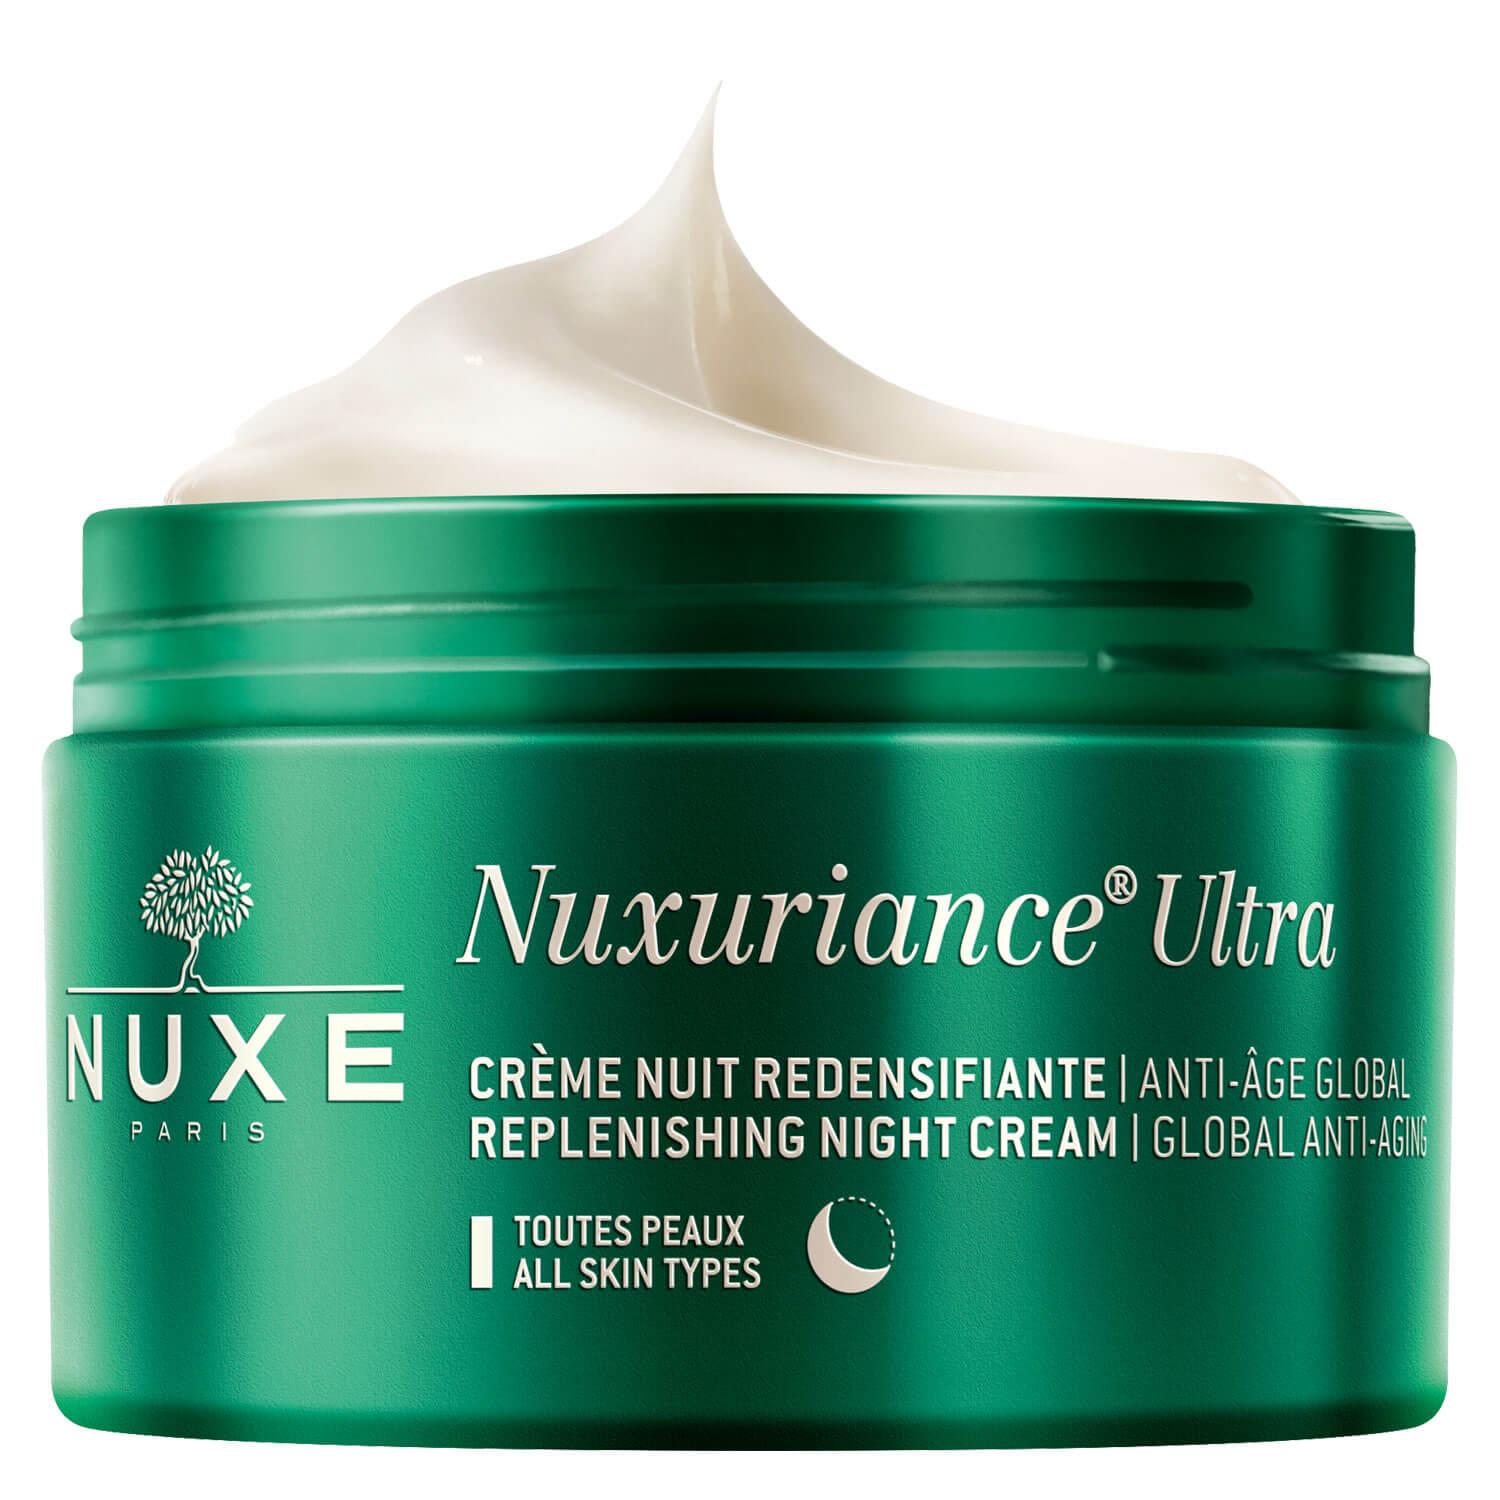 Nuxuriance Ultra - Crème Nuit Redensifiante